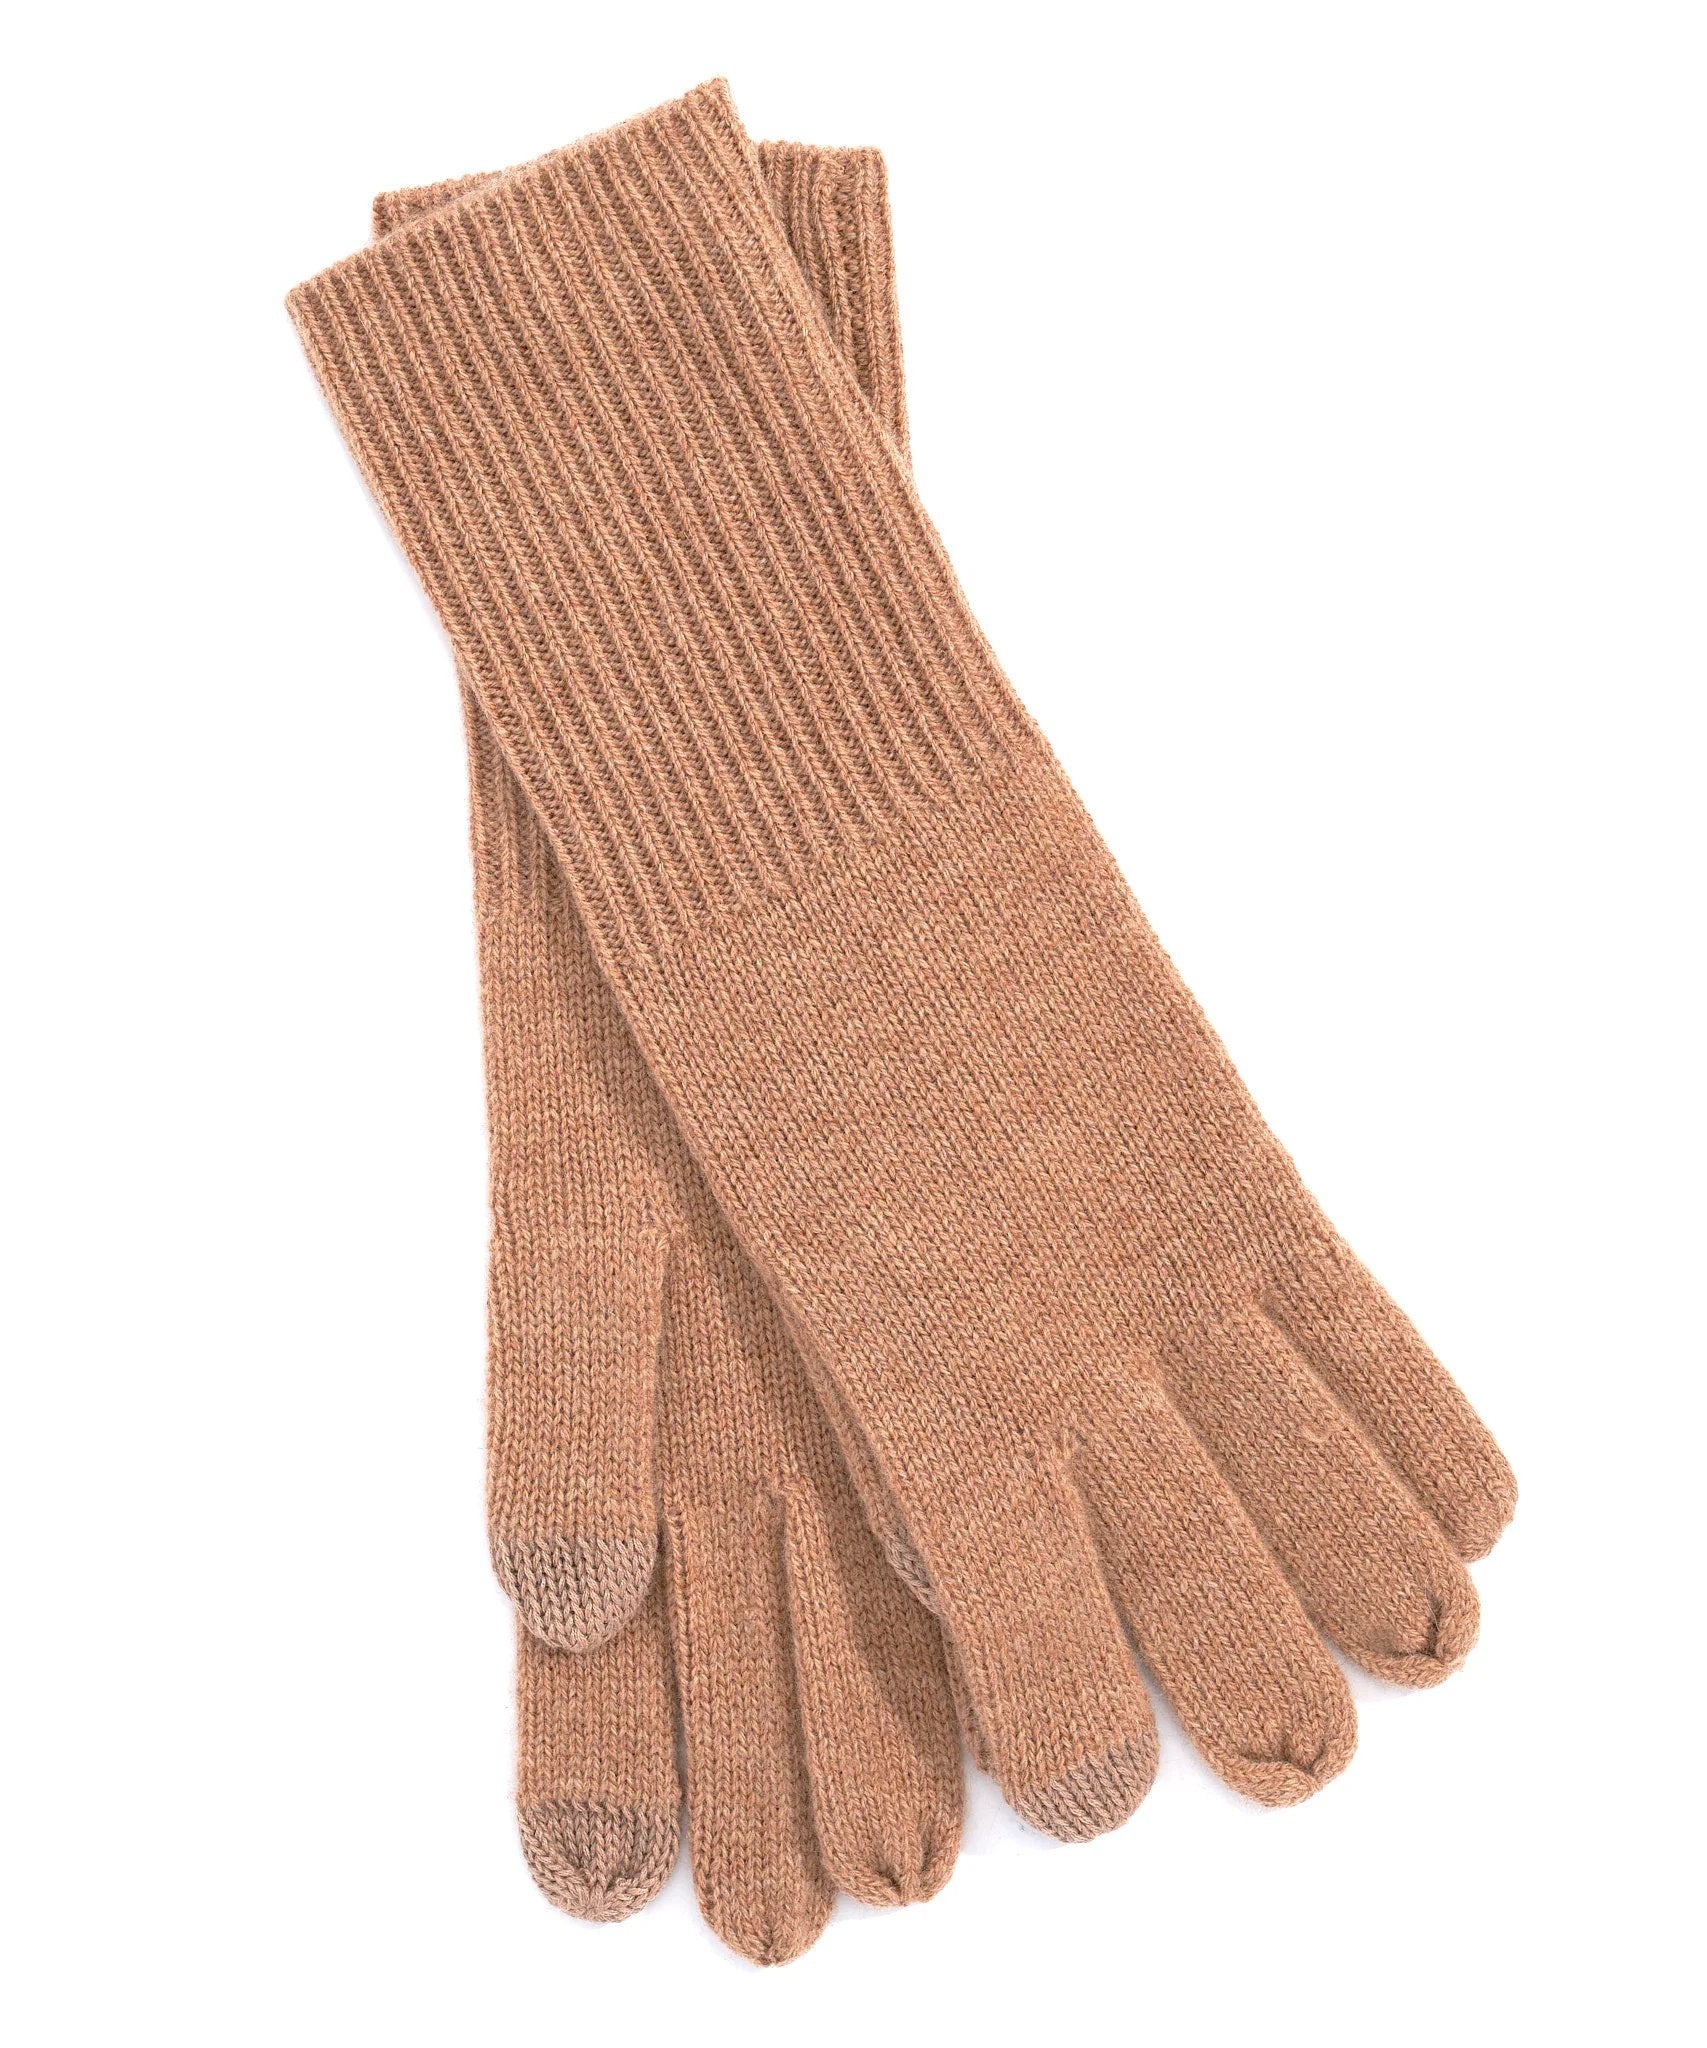 Wool/Cashmere Gloves - Echo - Danali - EC0613-Camel